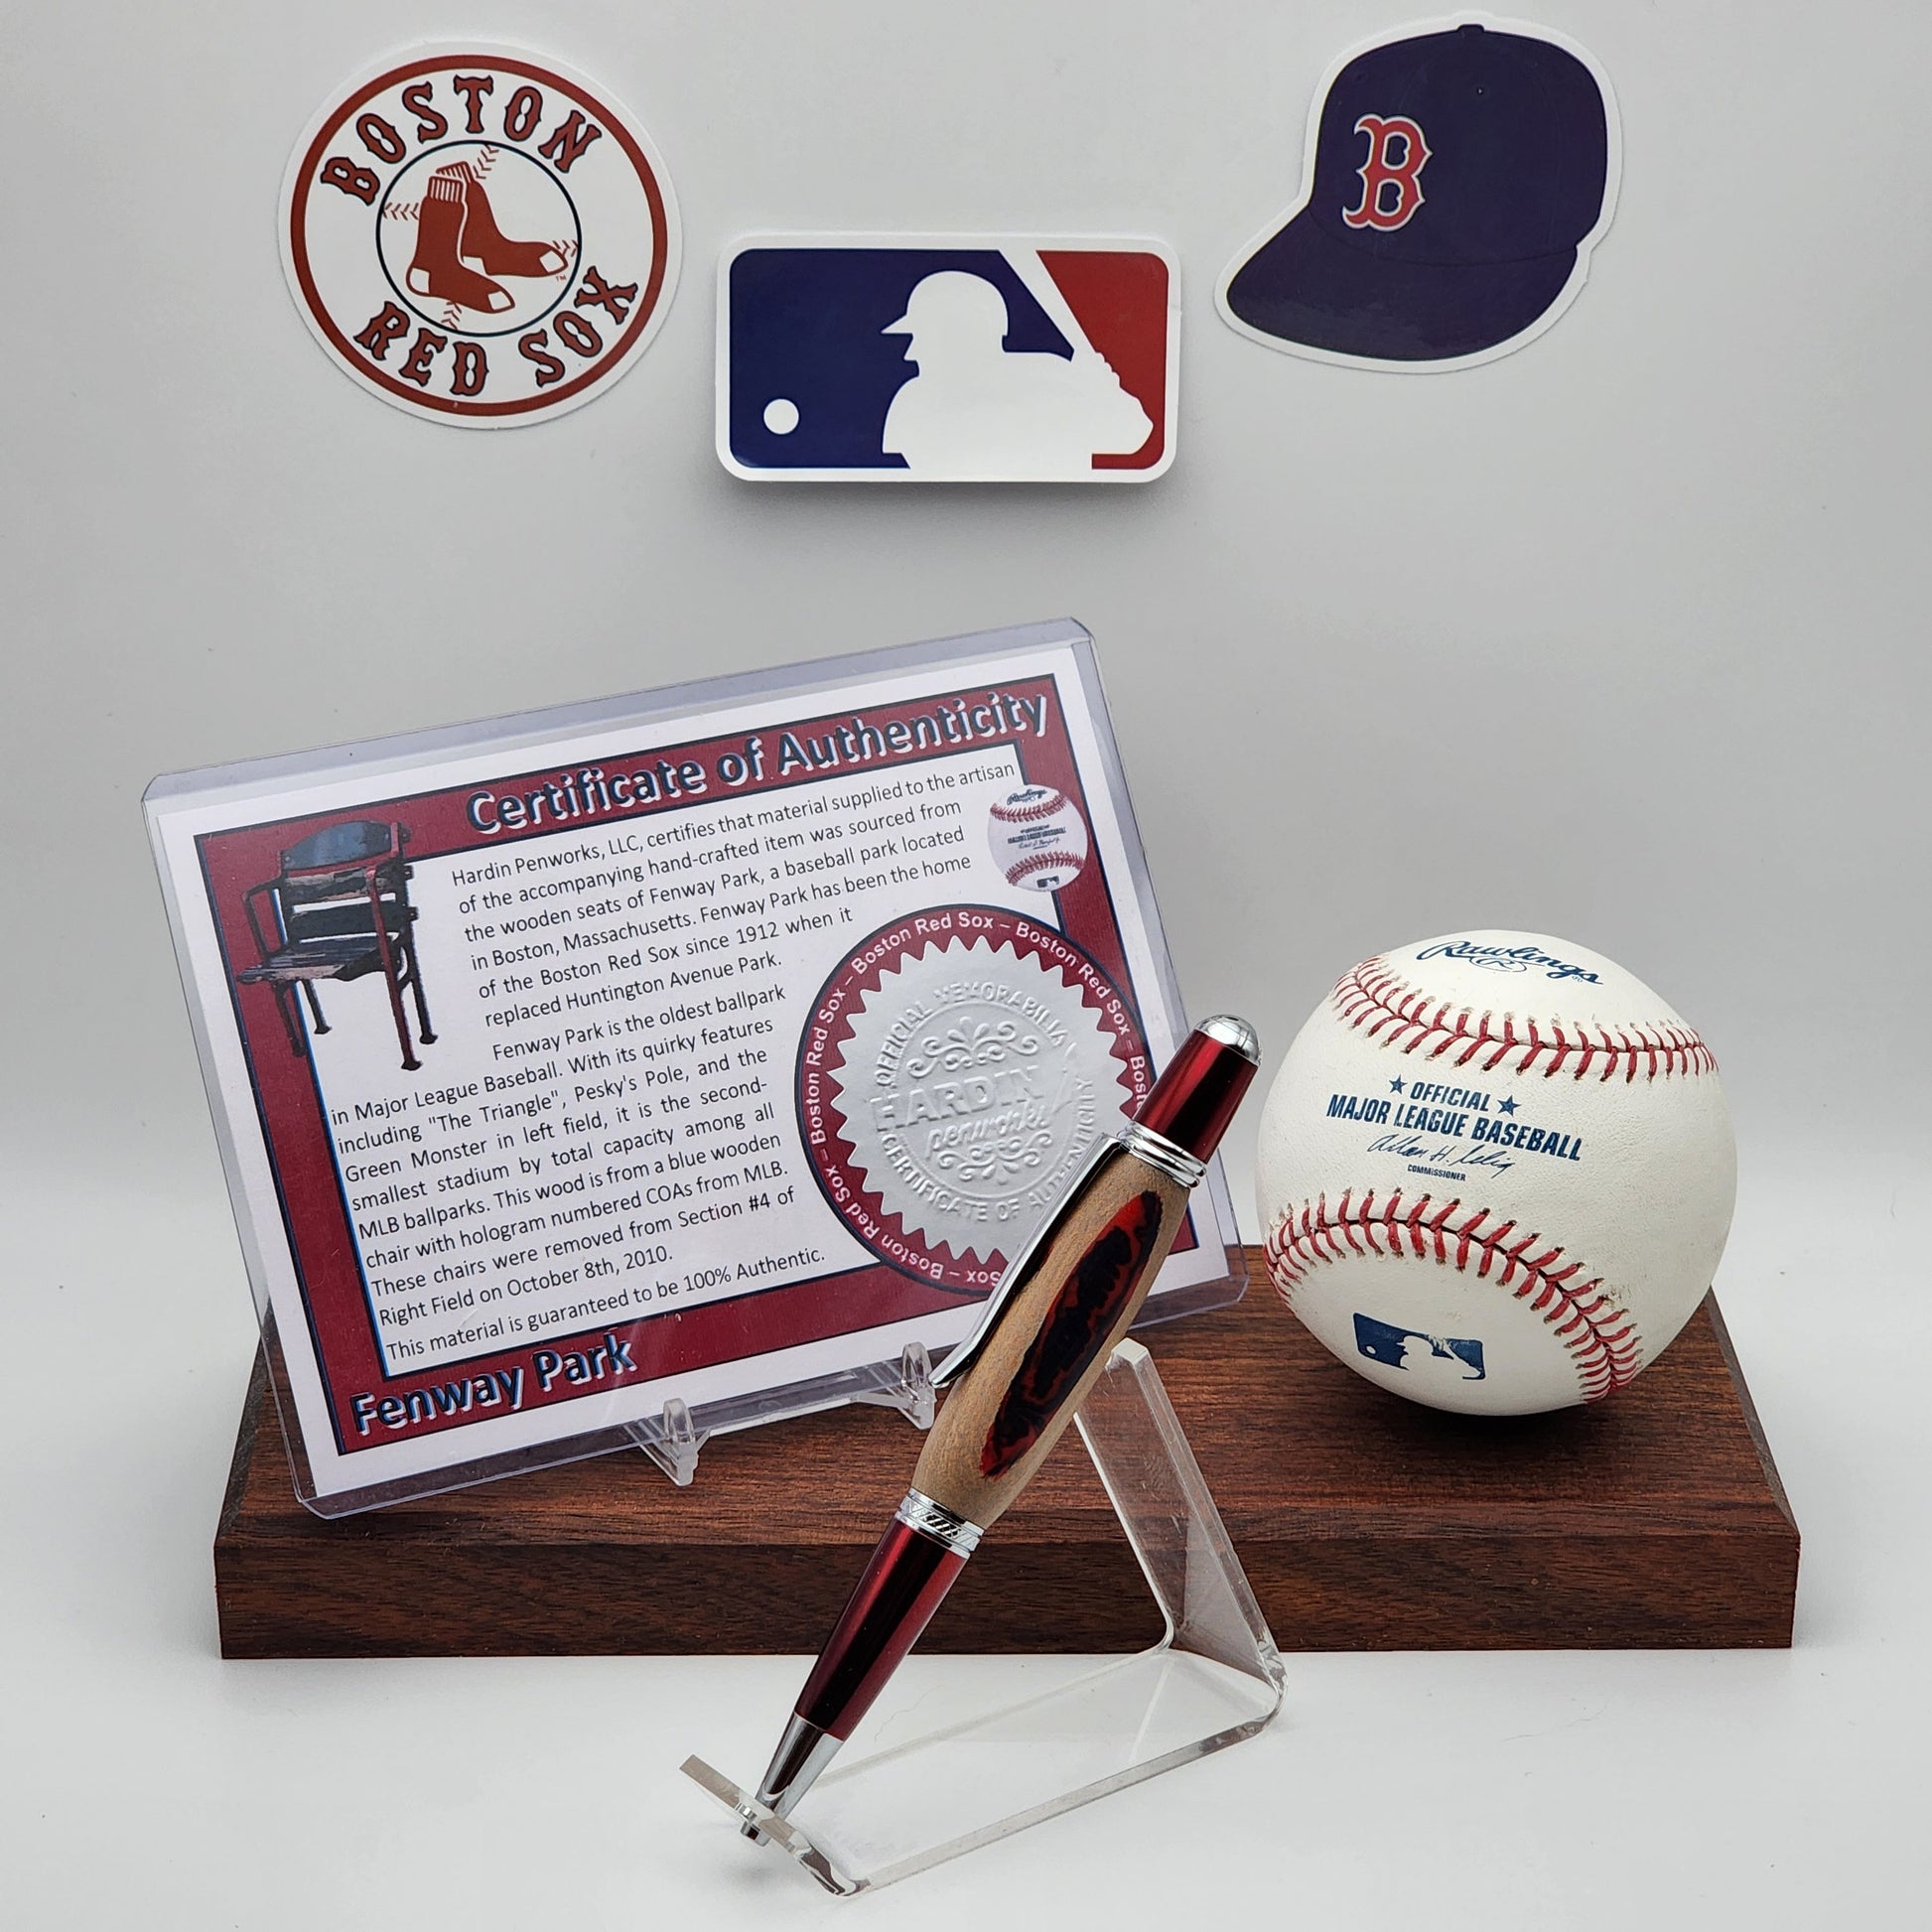 Boston Red Sox Pen | Fenway Park Souvenir Pen | Fenway Park Seat Pen | Baseball | Collectible | MLB | Handcrafted Pen | Red Sox Fan Gift